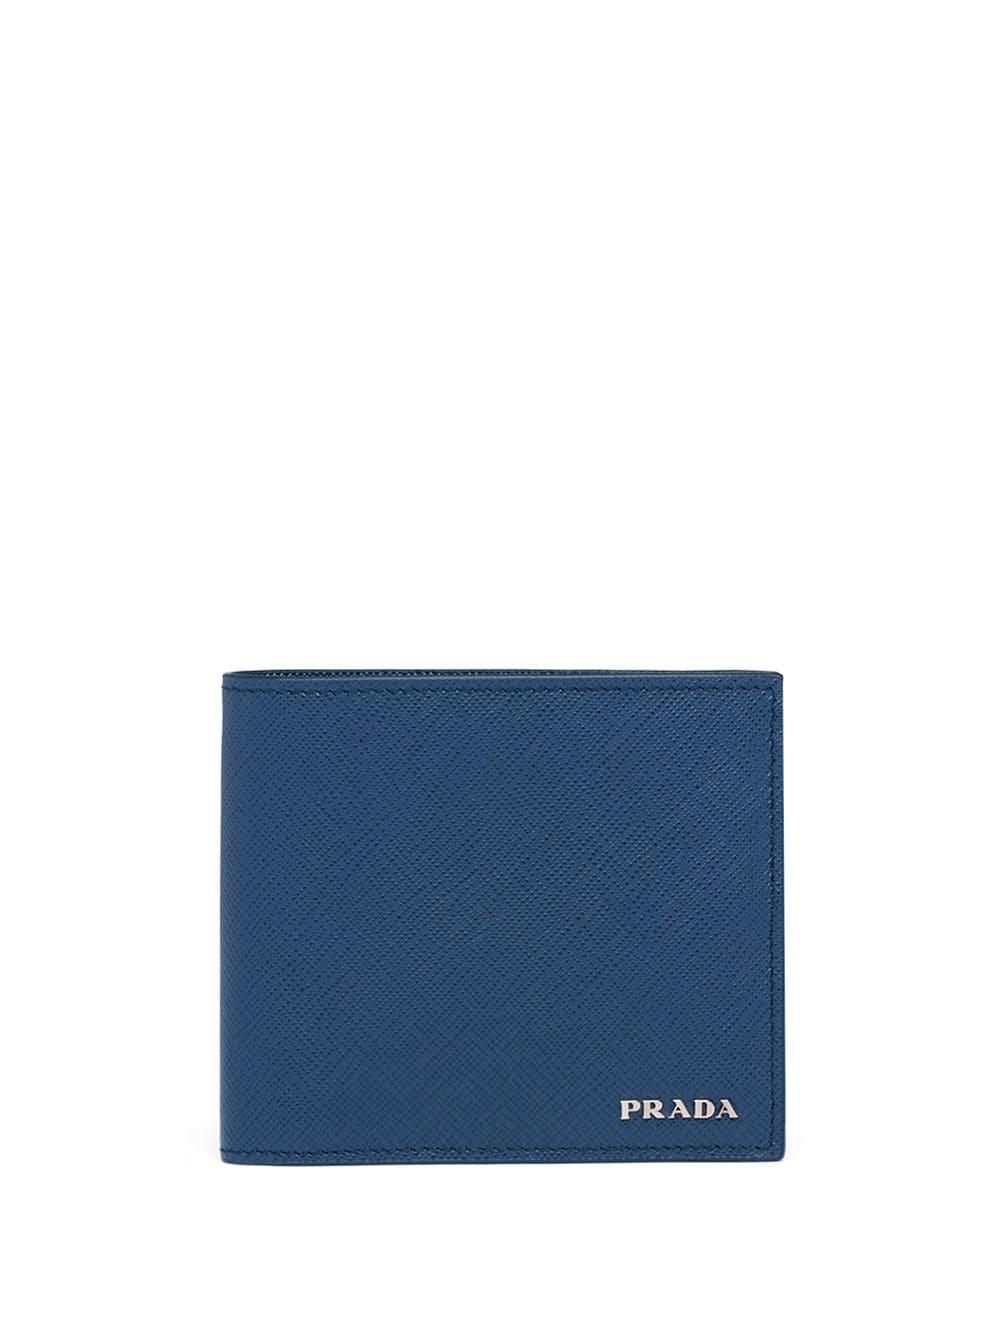 Prada Leather Saffiano Colour Block Wallet in Blue for Men - Lyst